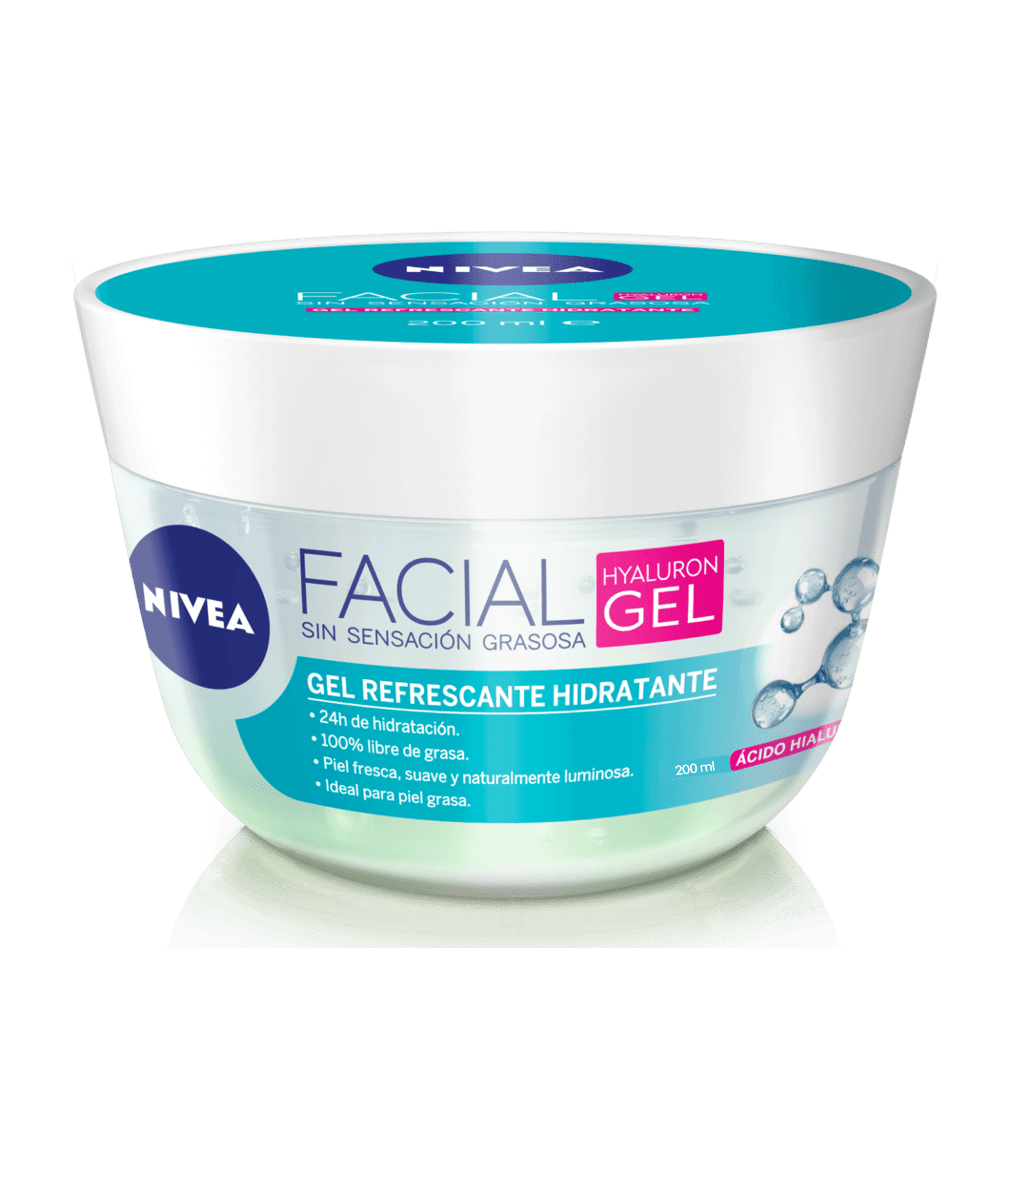 NIVEA Facial Hyaluron Gel